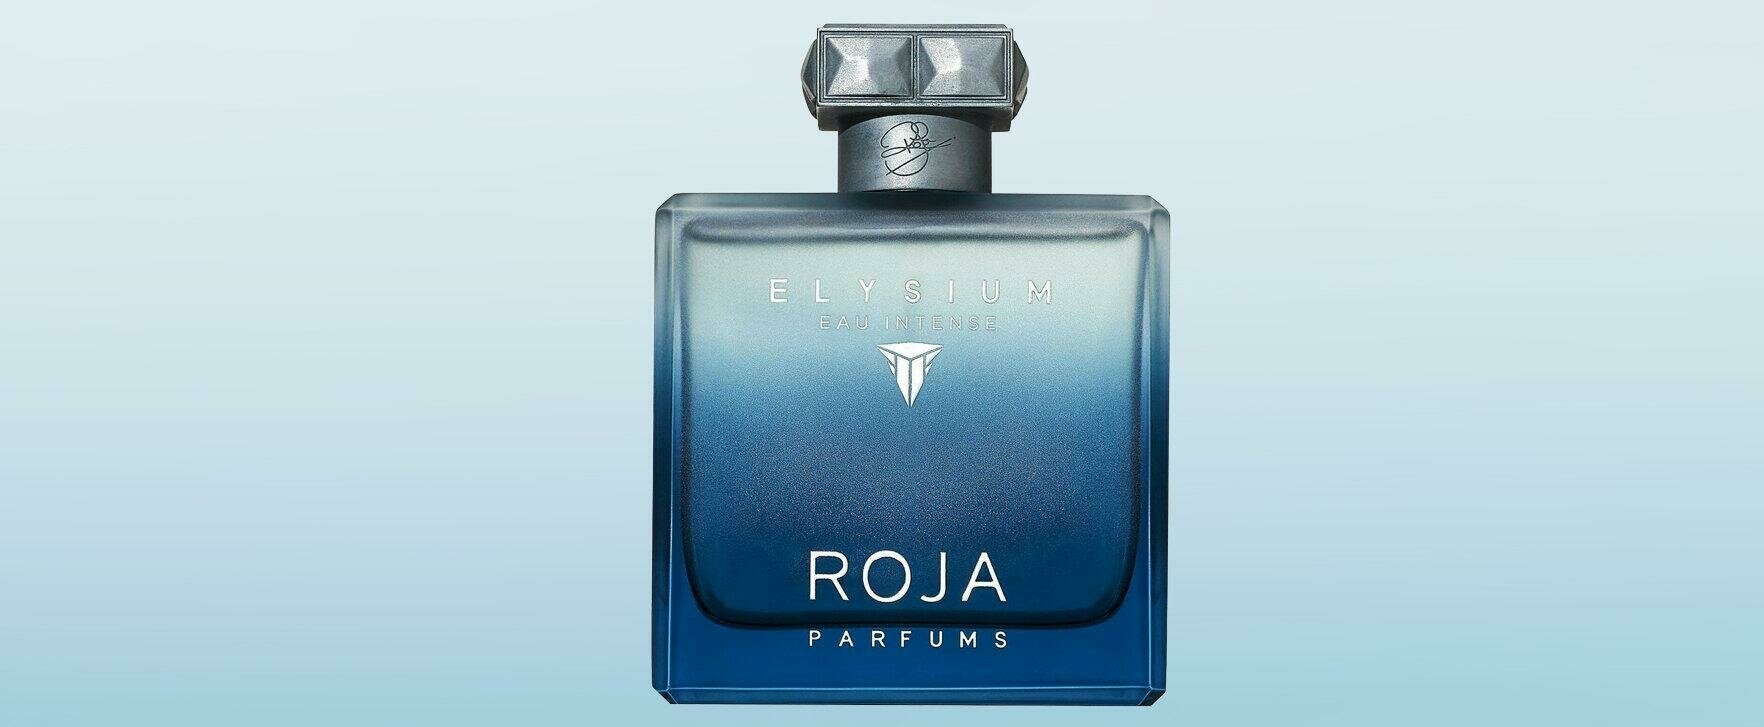 Intensely Refreshing: Roja Parfums Presents the Reinterpretation of Elysium